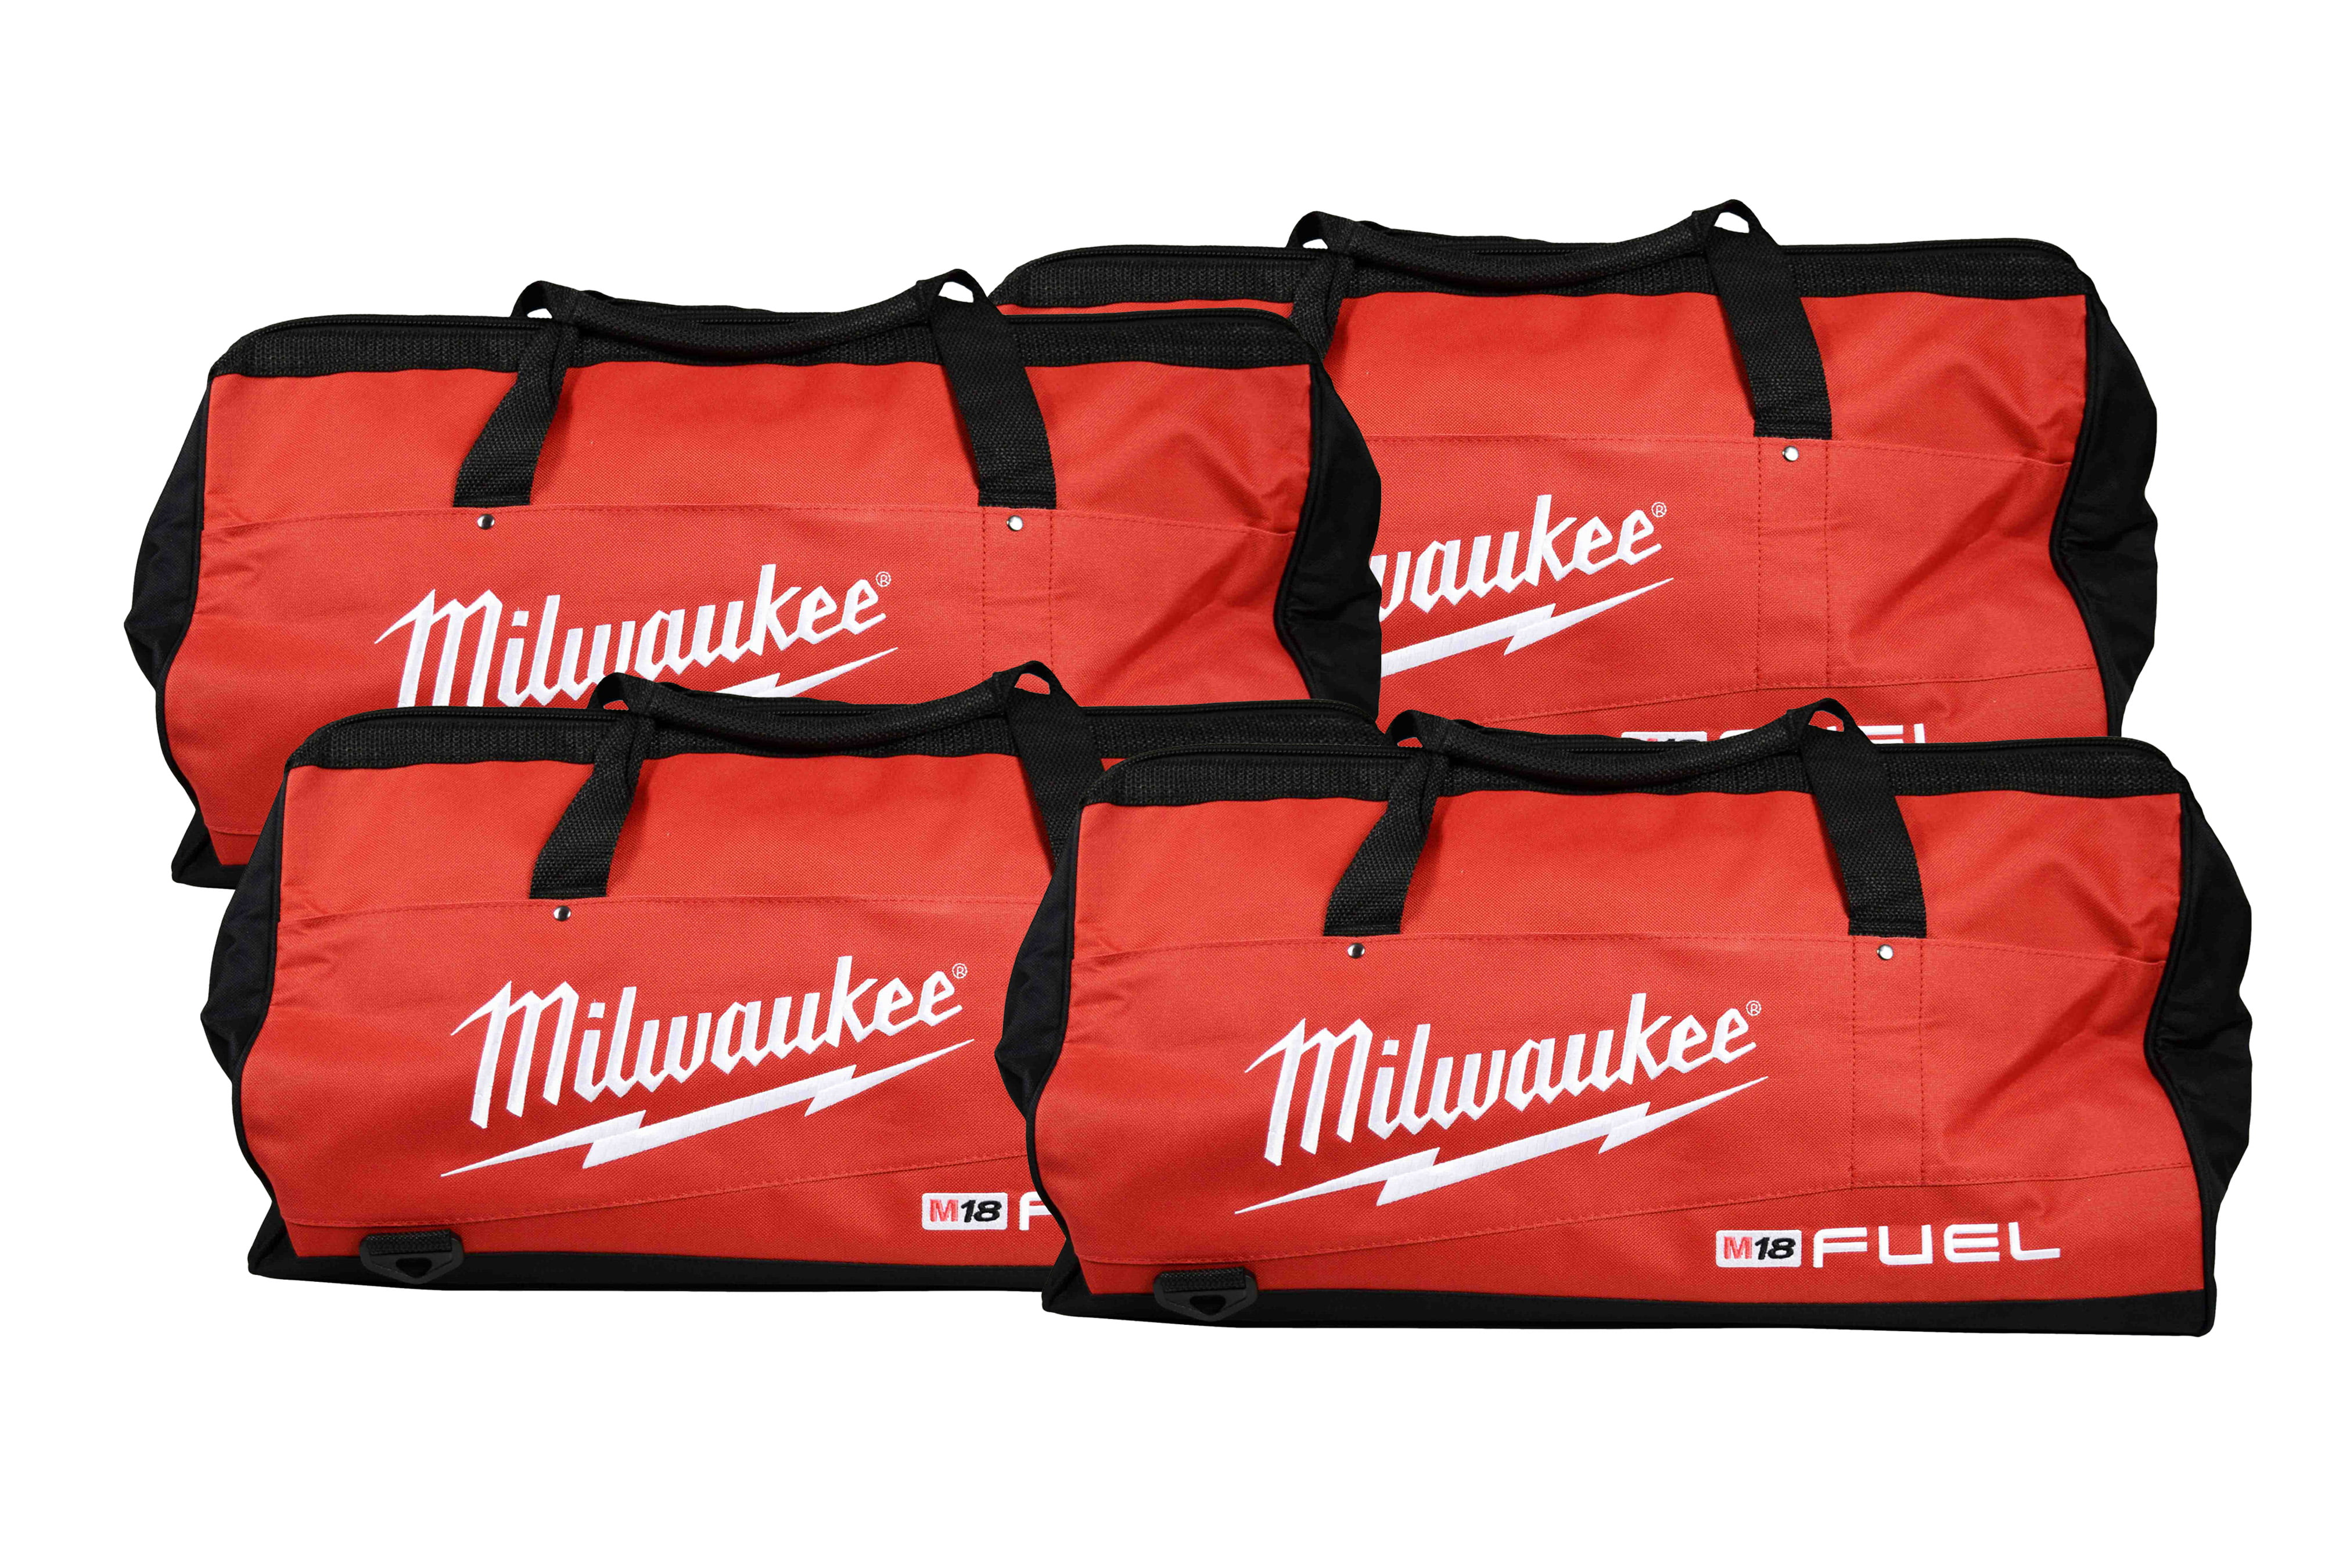 Milwaukee M18 Fuel Bag 22x12x12 Work Milwaukee Bag 16x11x10 Gym LOT OF 2 